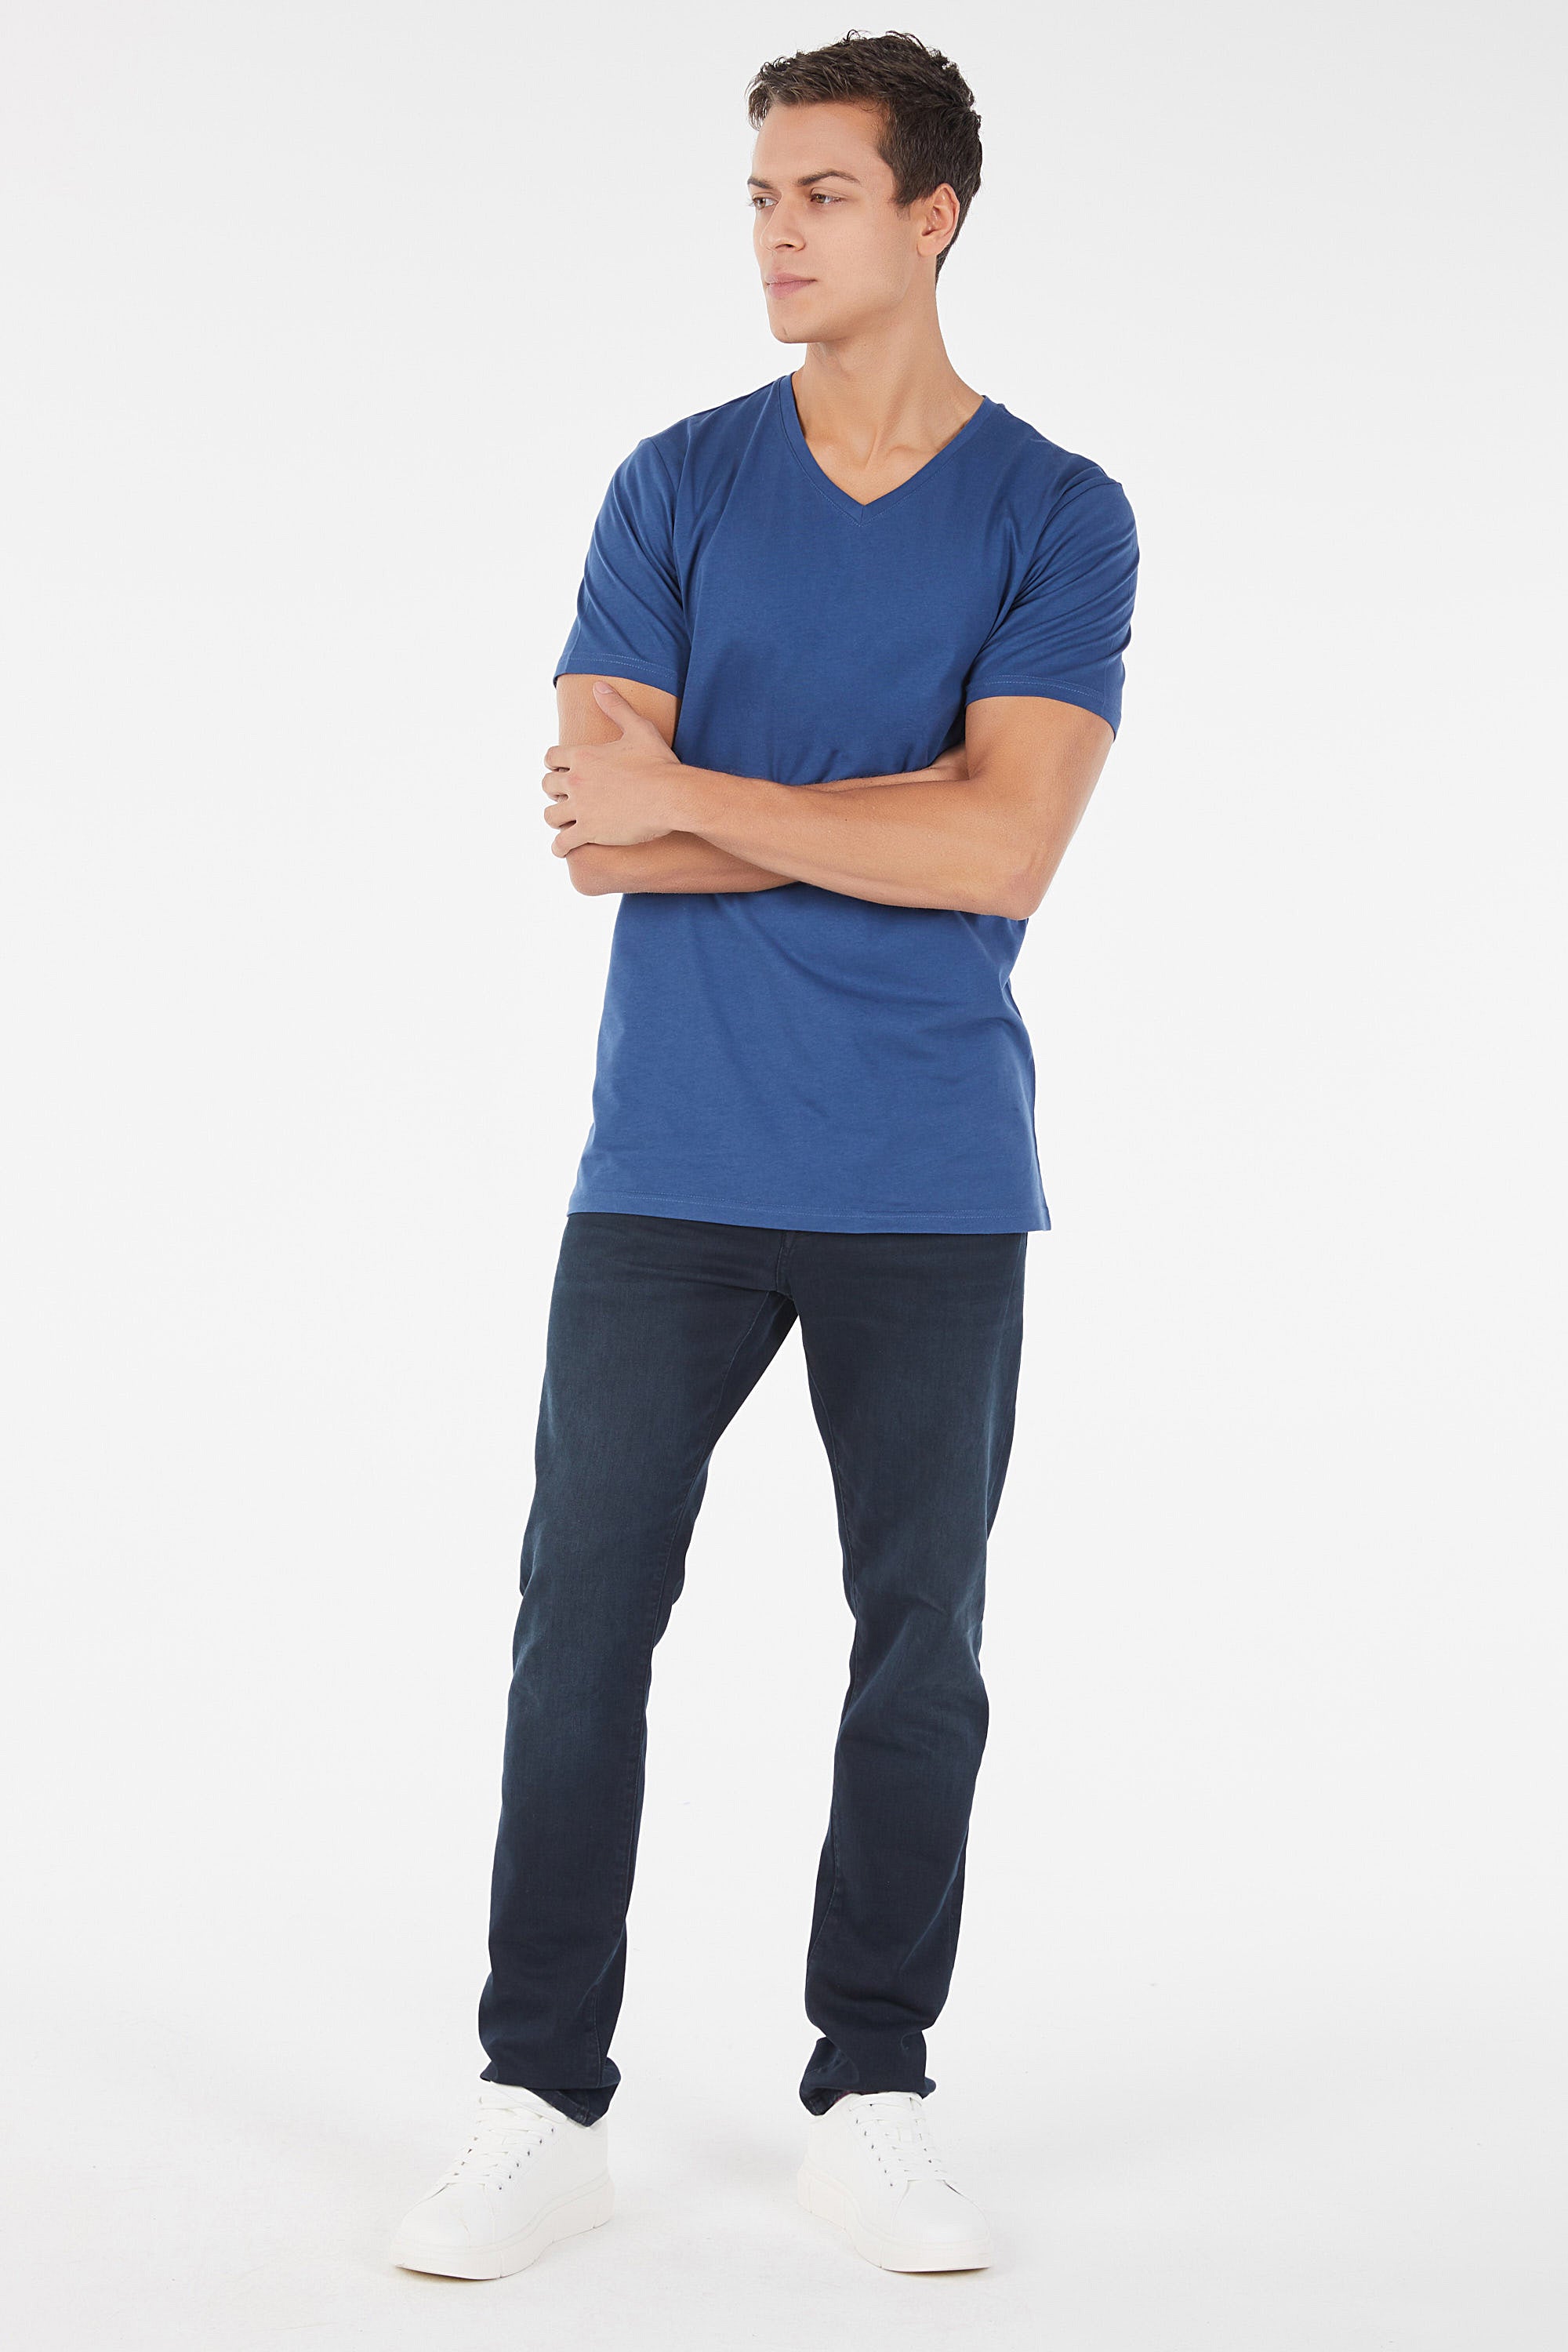 Ajax Blue T-Shirt For Man | Vary Fits